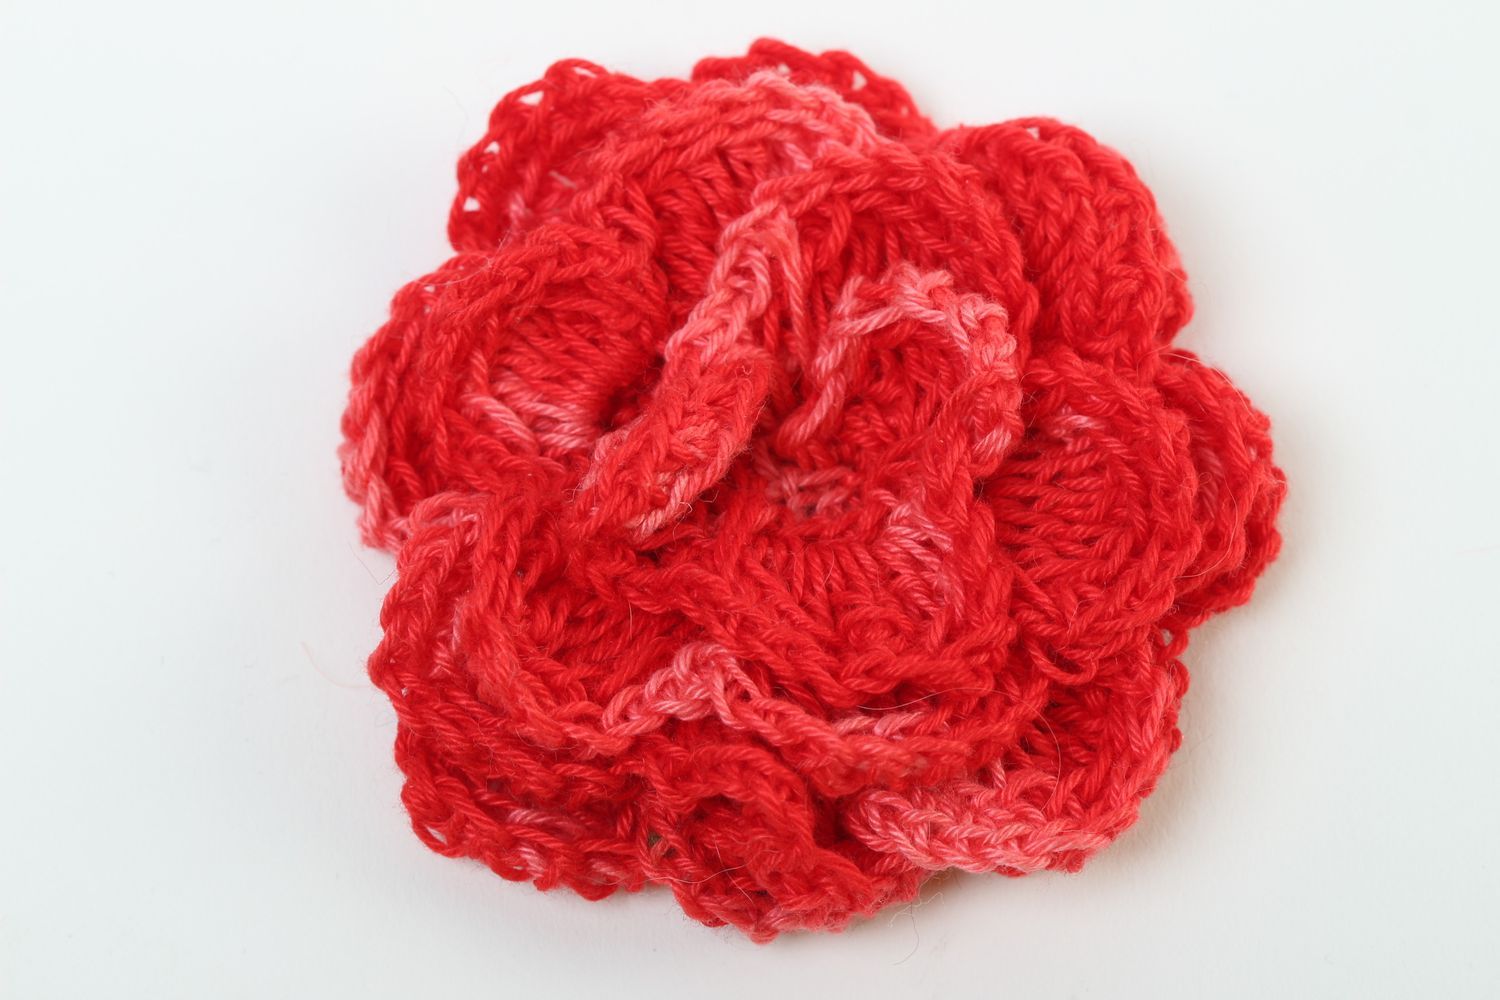 Handmade crocheted flower decorative flowers crochet ideas homemade crafts photo 2